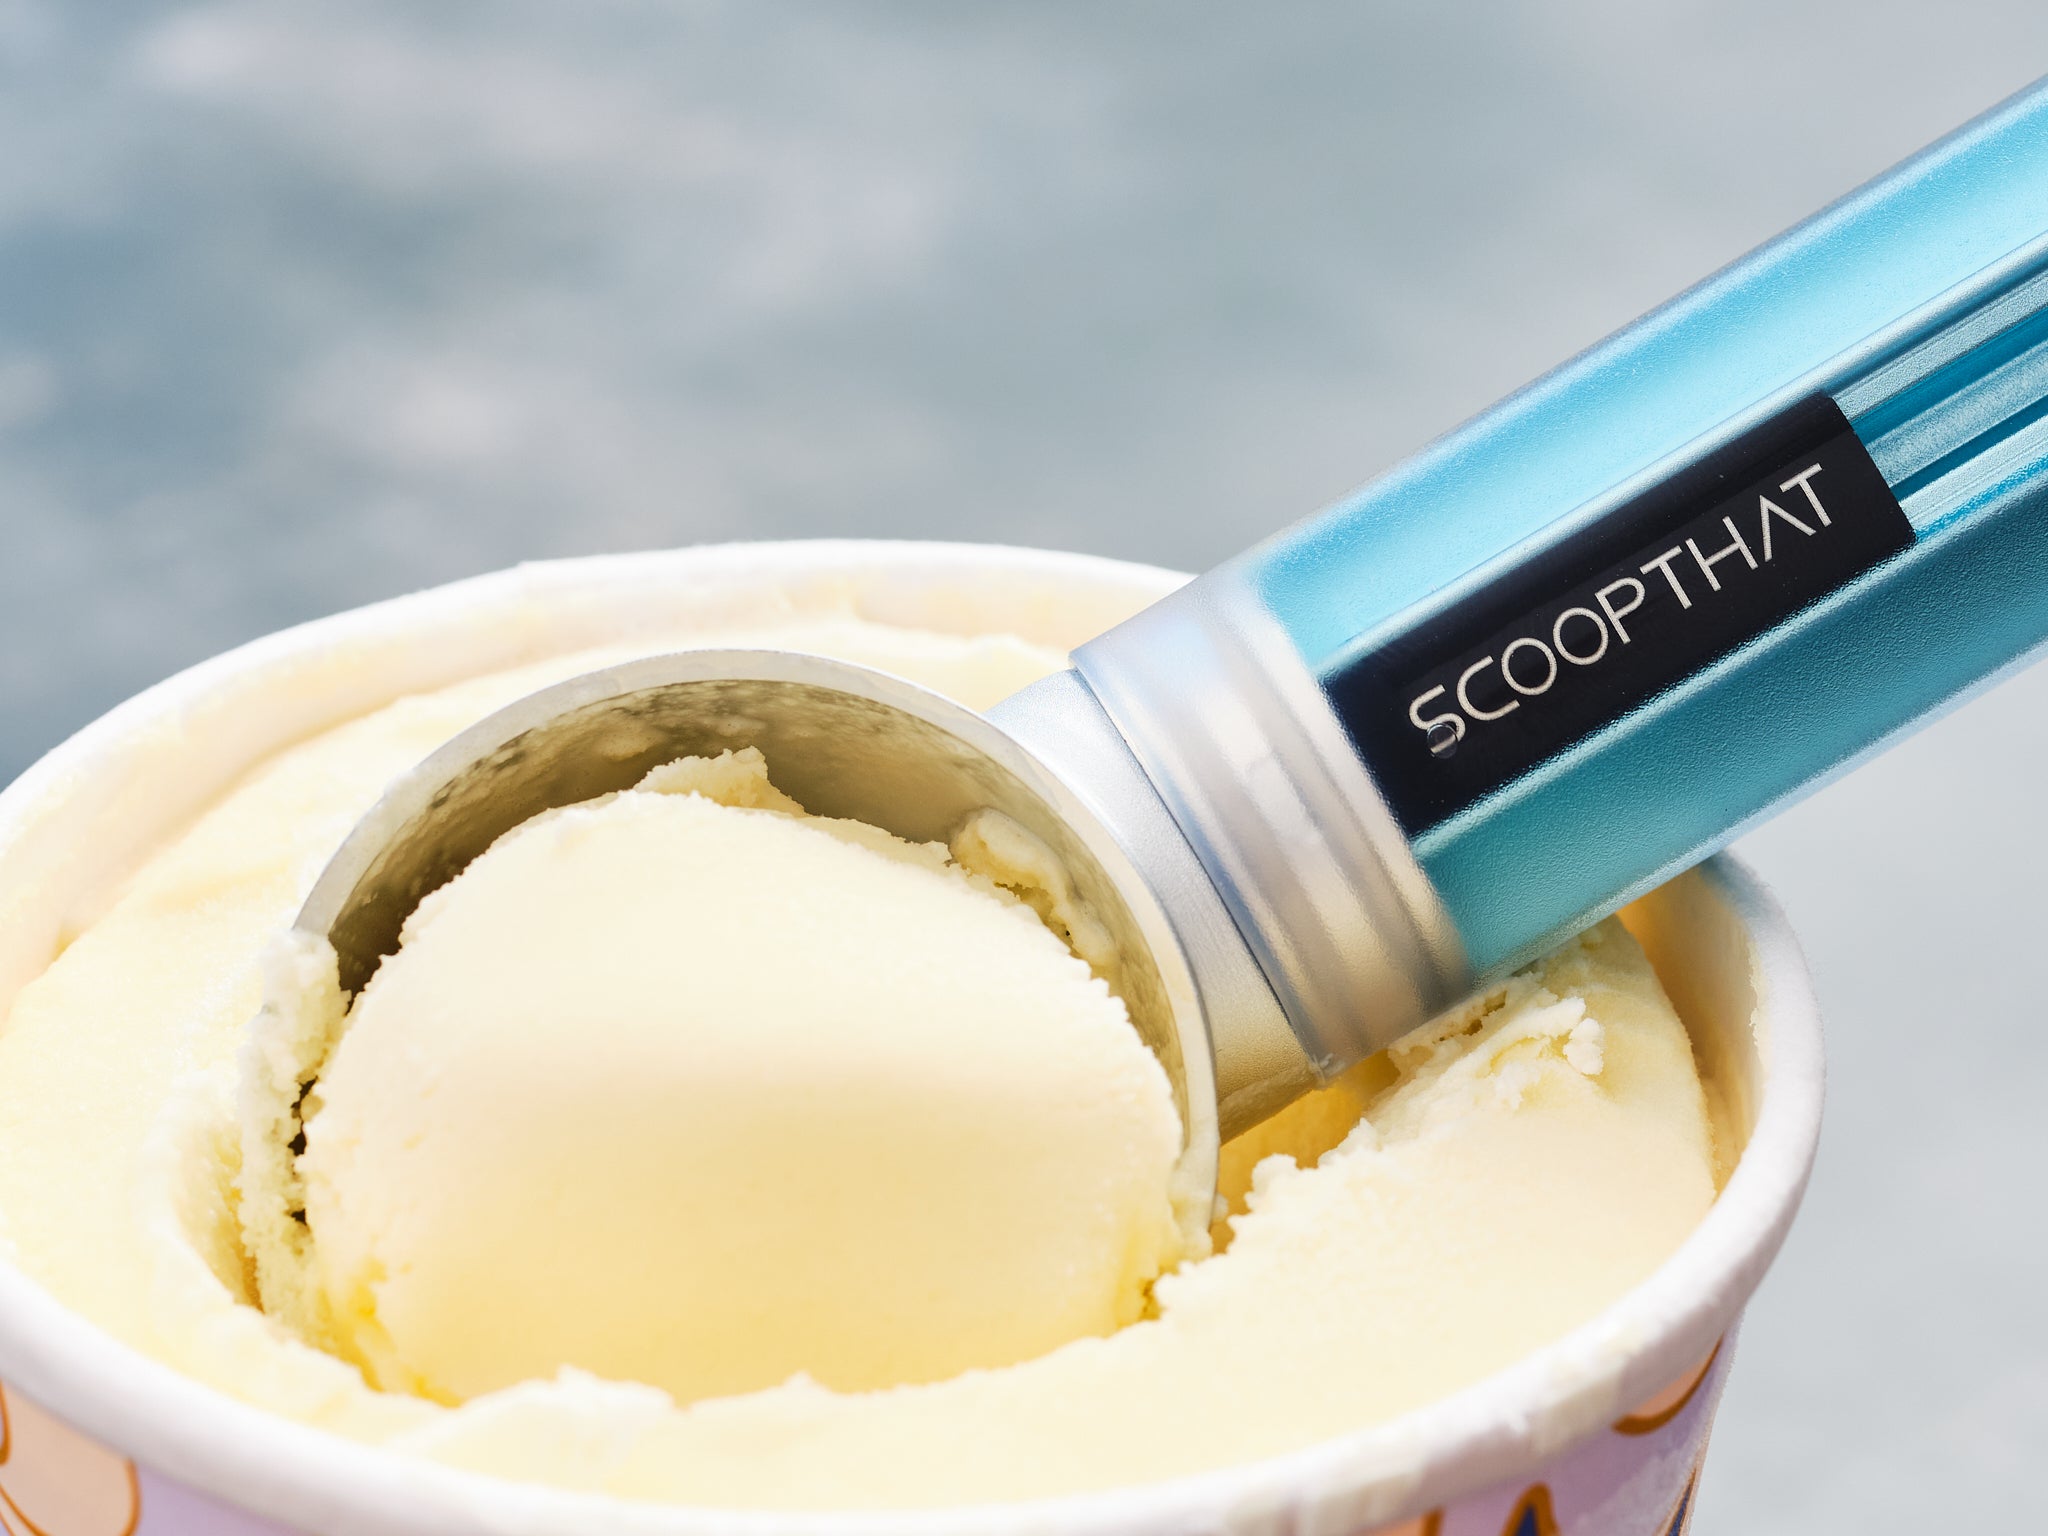 ScoopThat Ice Cream Scoop